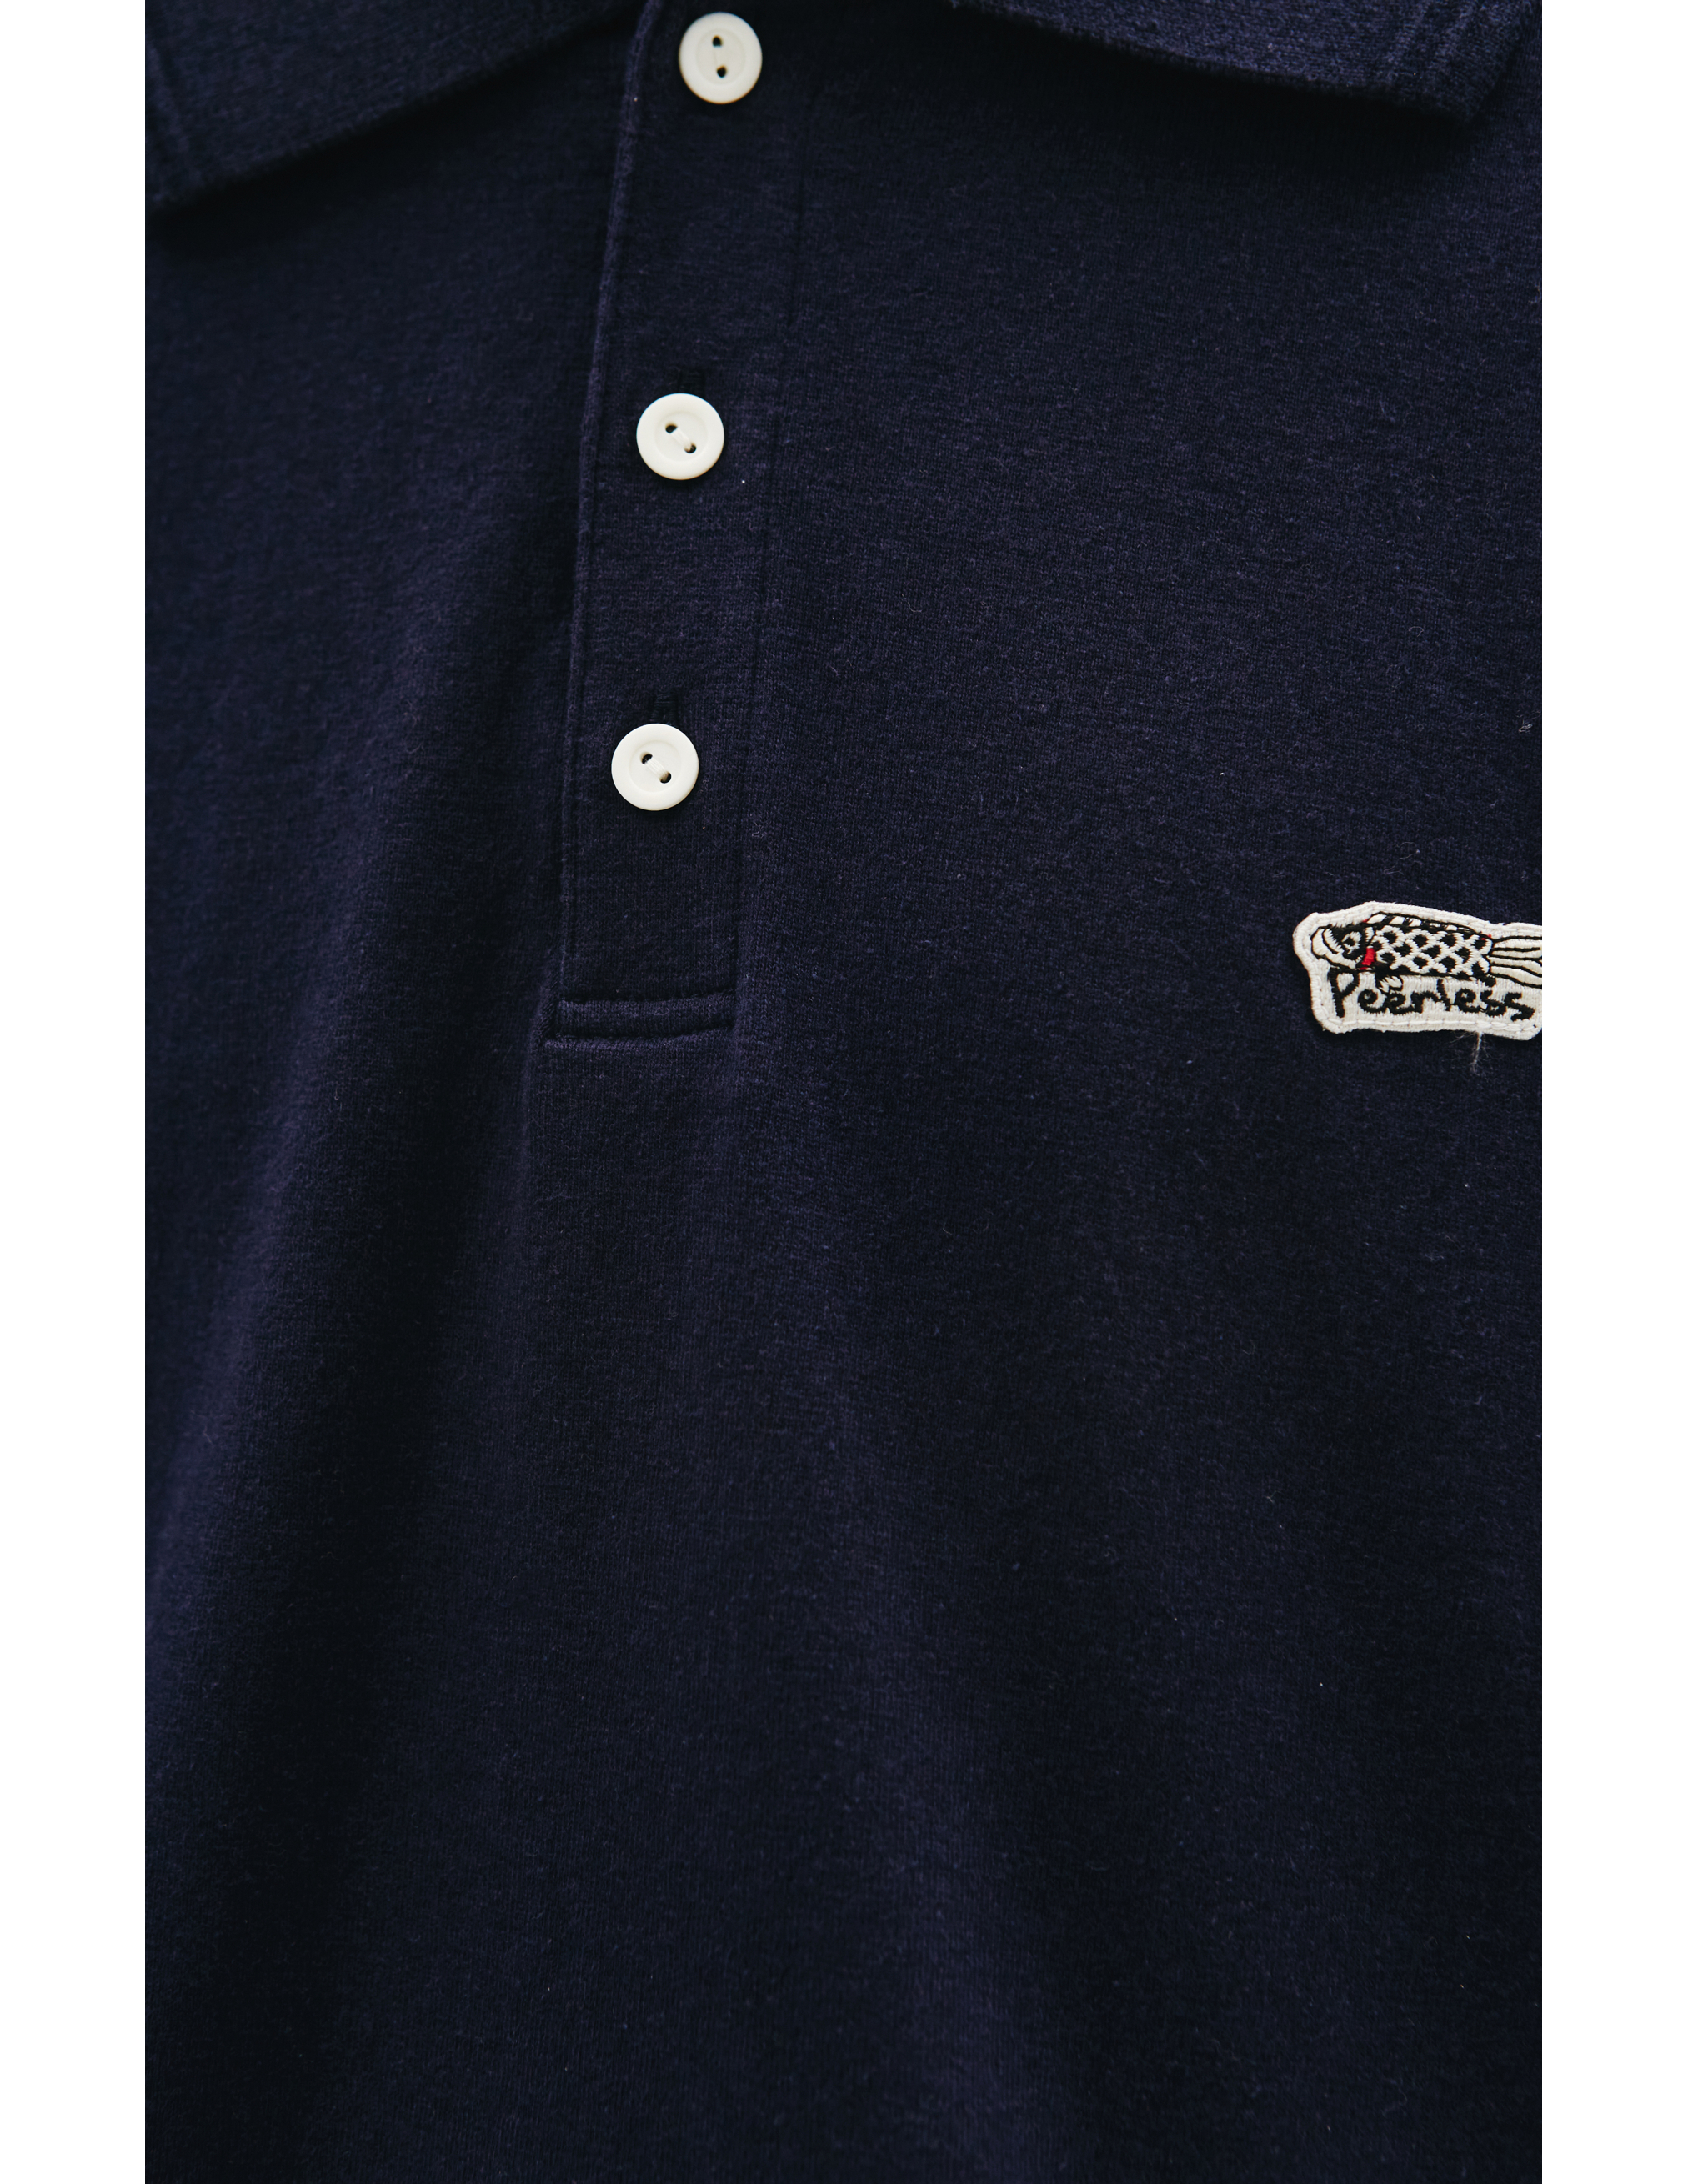 Поло Jumbo Weller с вышивкой visvim 0122105010018/navy, размер 5;4 0122105010018/navy - фото 5